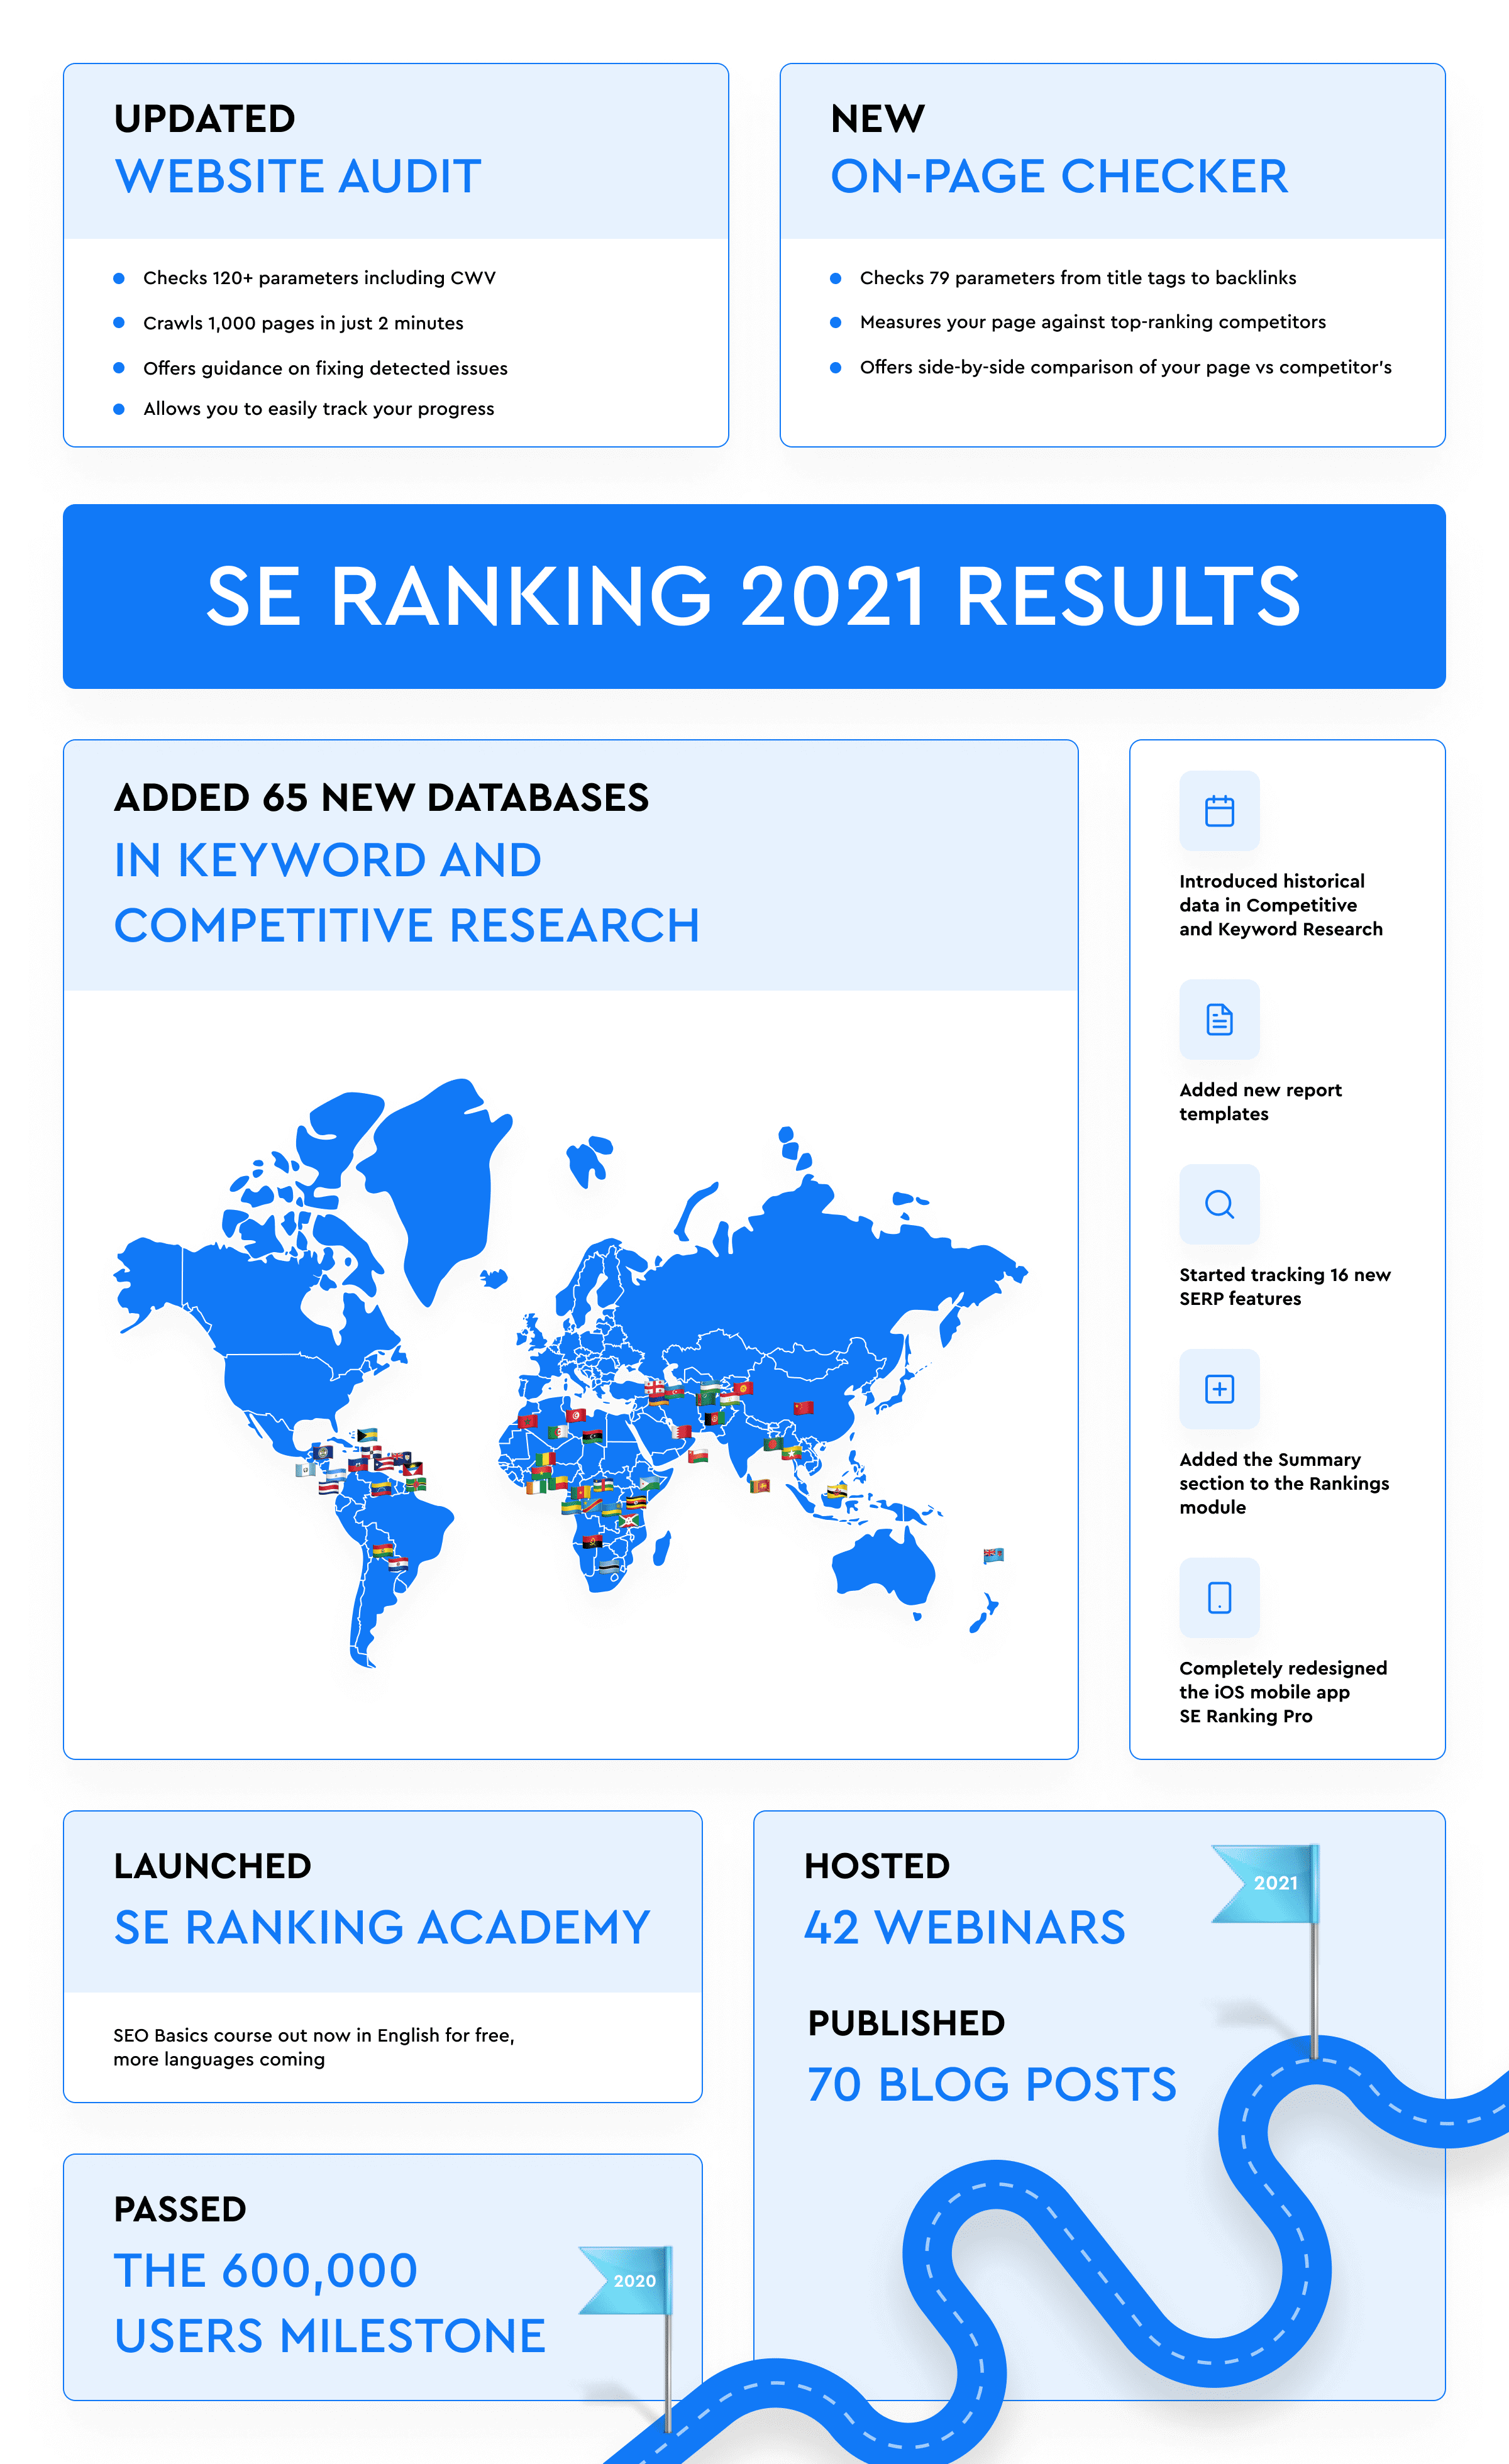 SE Ranking accomplishments in 2021